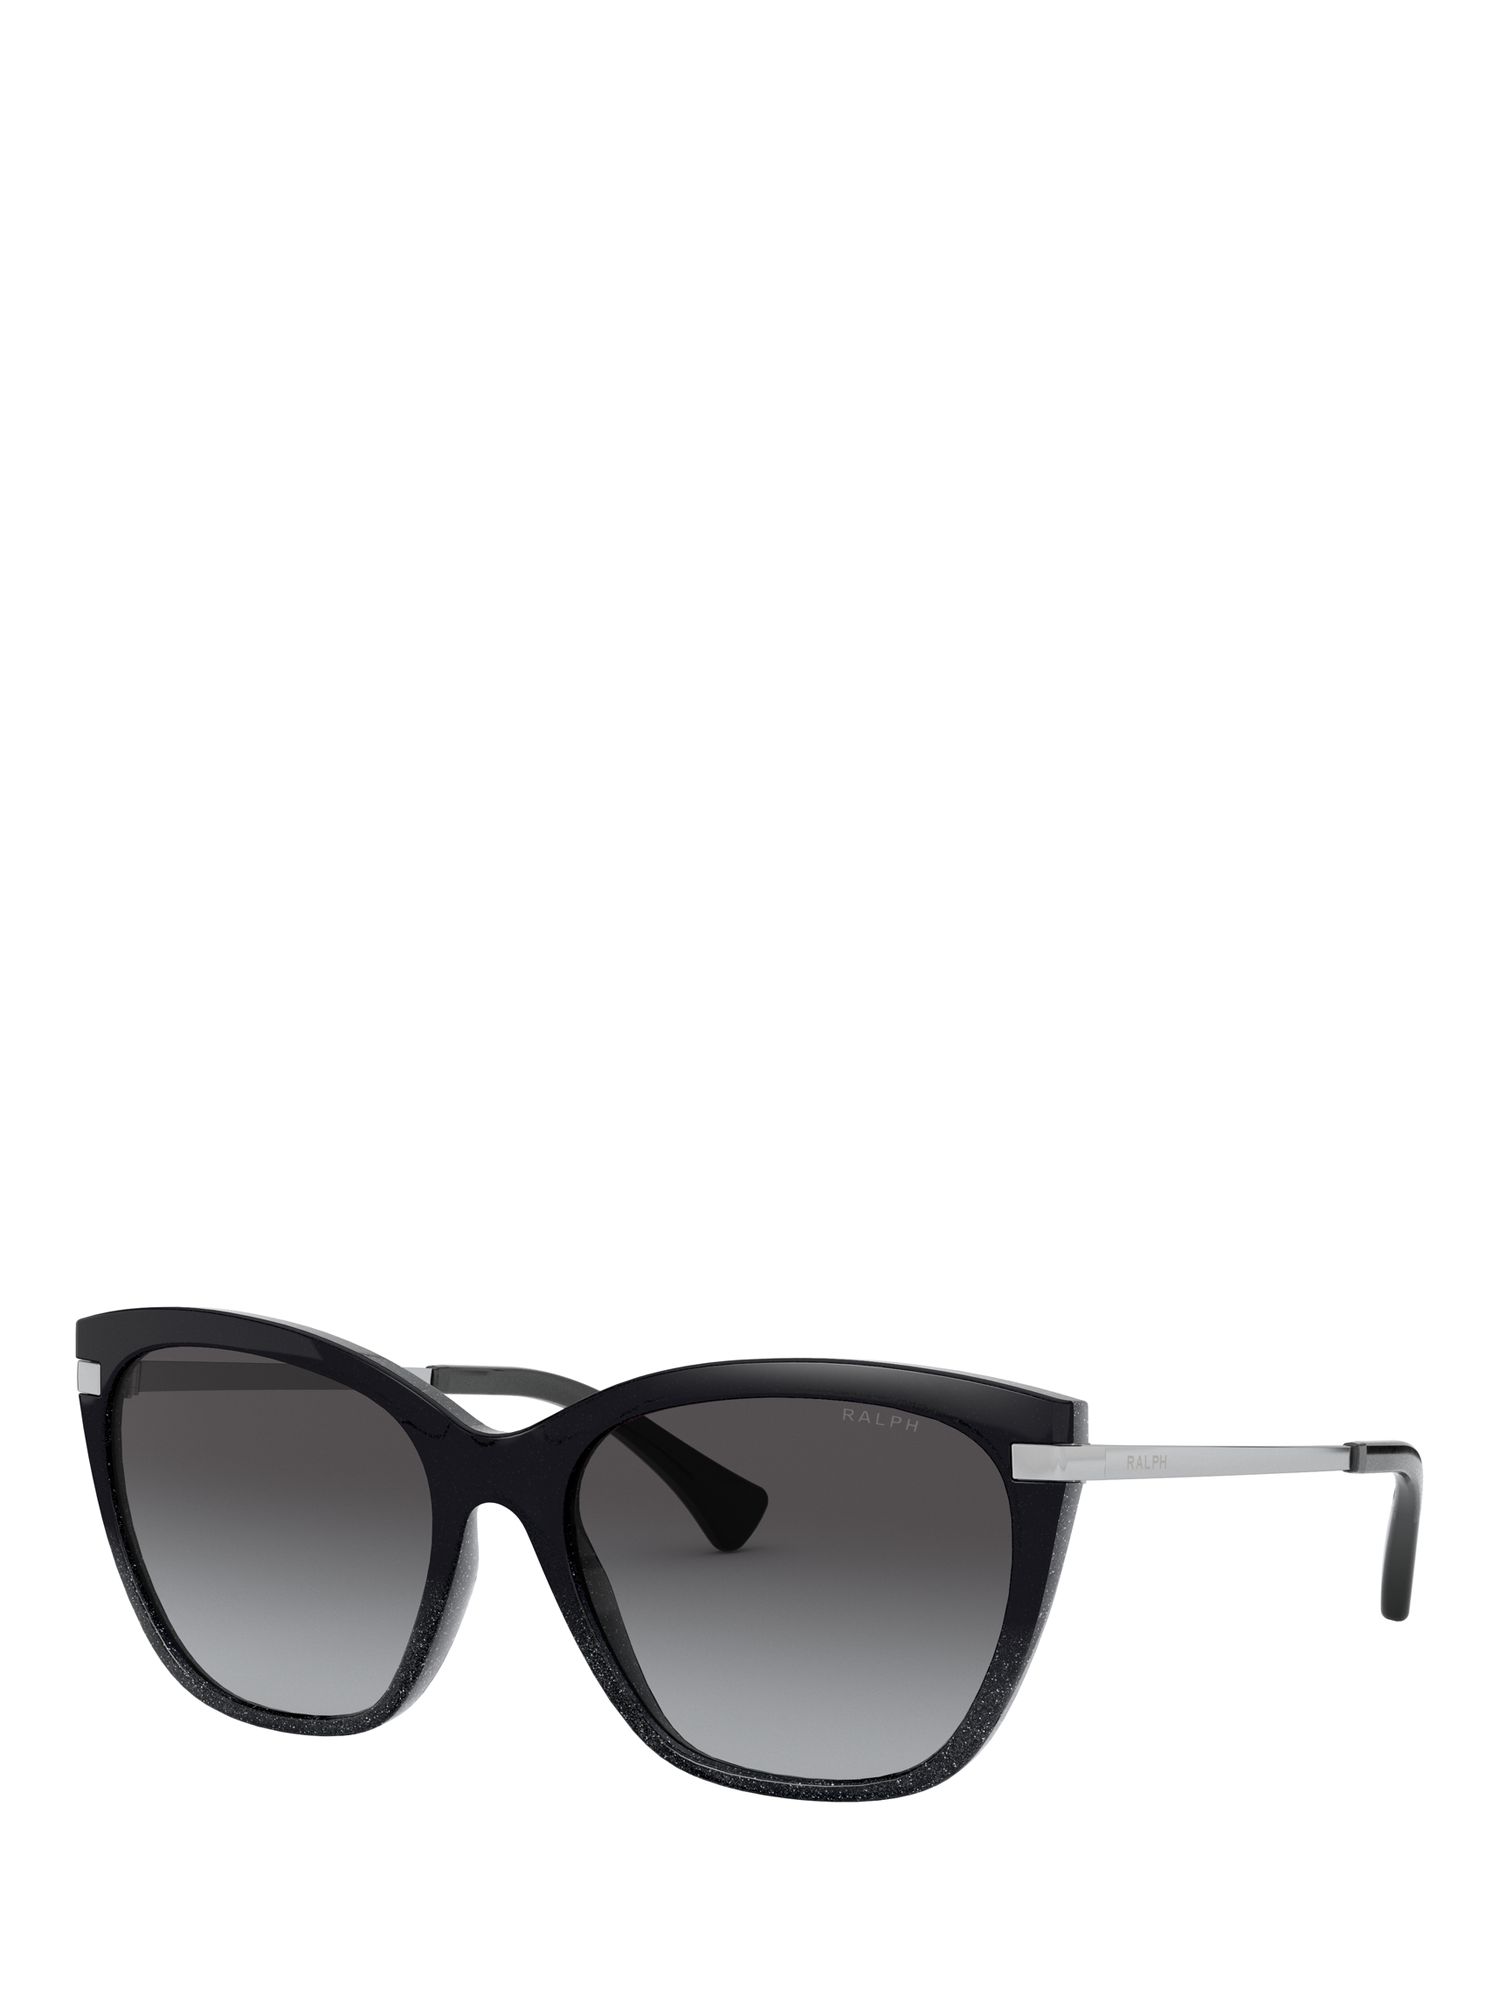 Ralph Lauren RA5267 Women's Butterfly Sunglasses, Black/Grey Gradient at  John Lewis & Partners